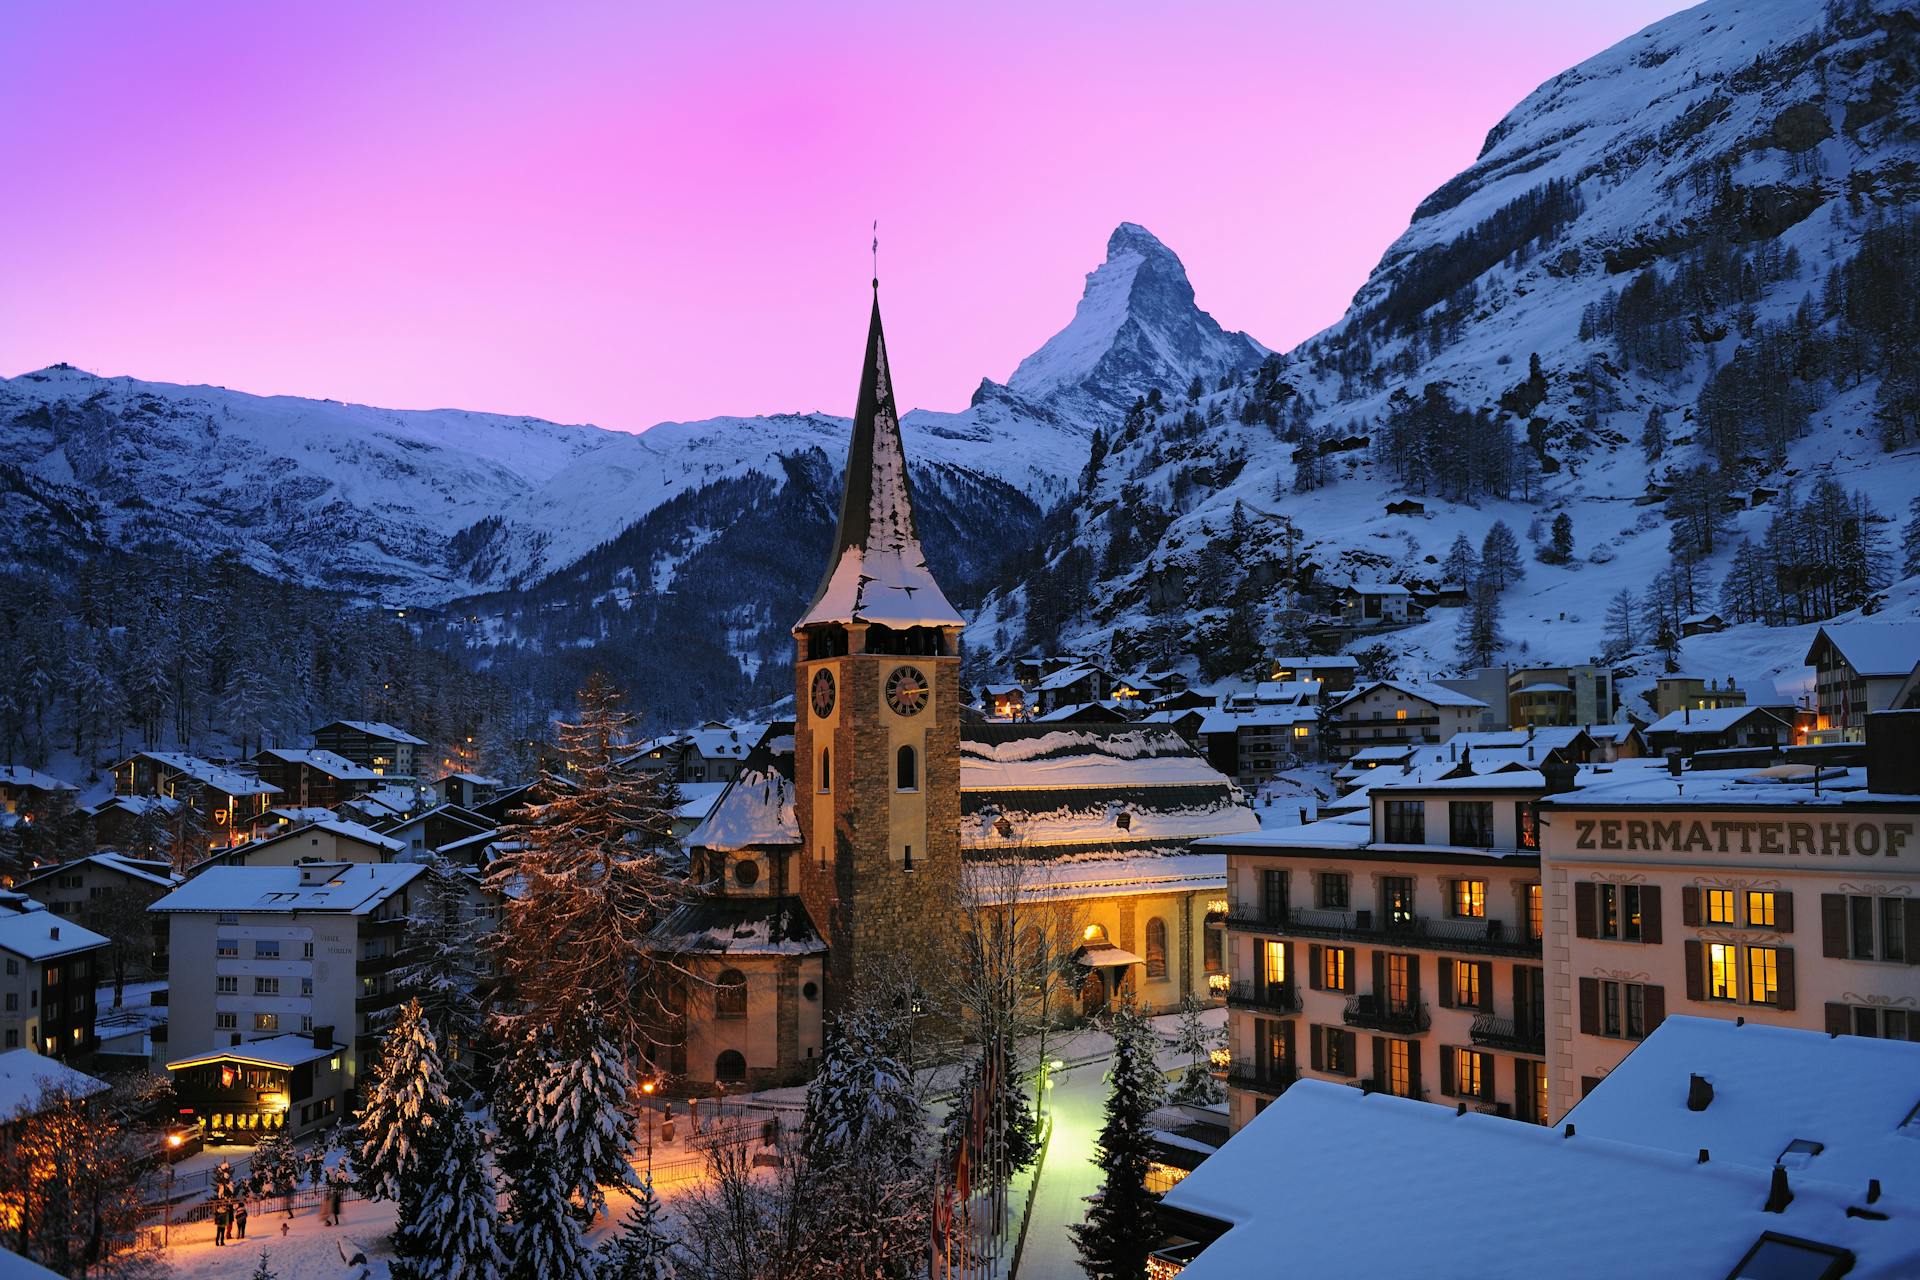 Traditional church and town of Zermatt ski resort in winter at sunset